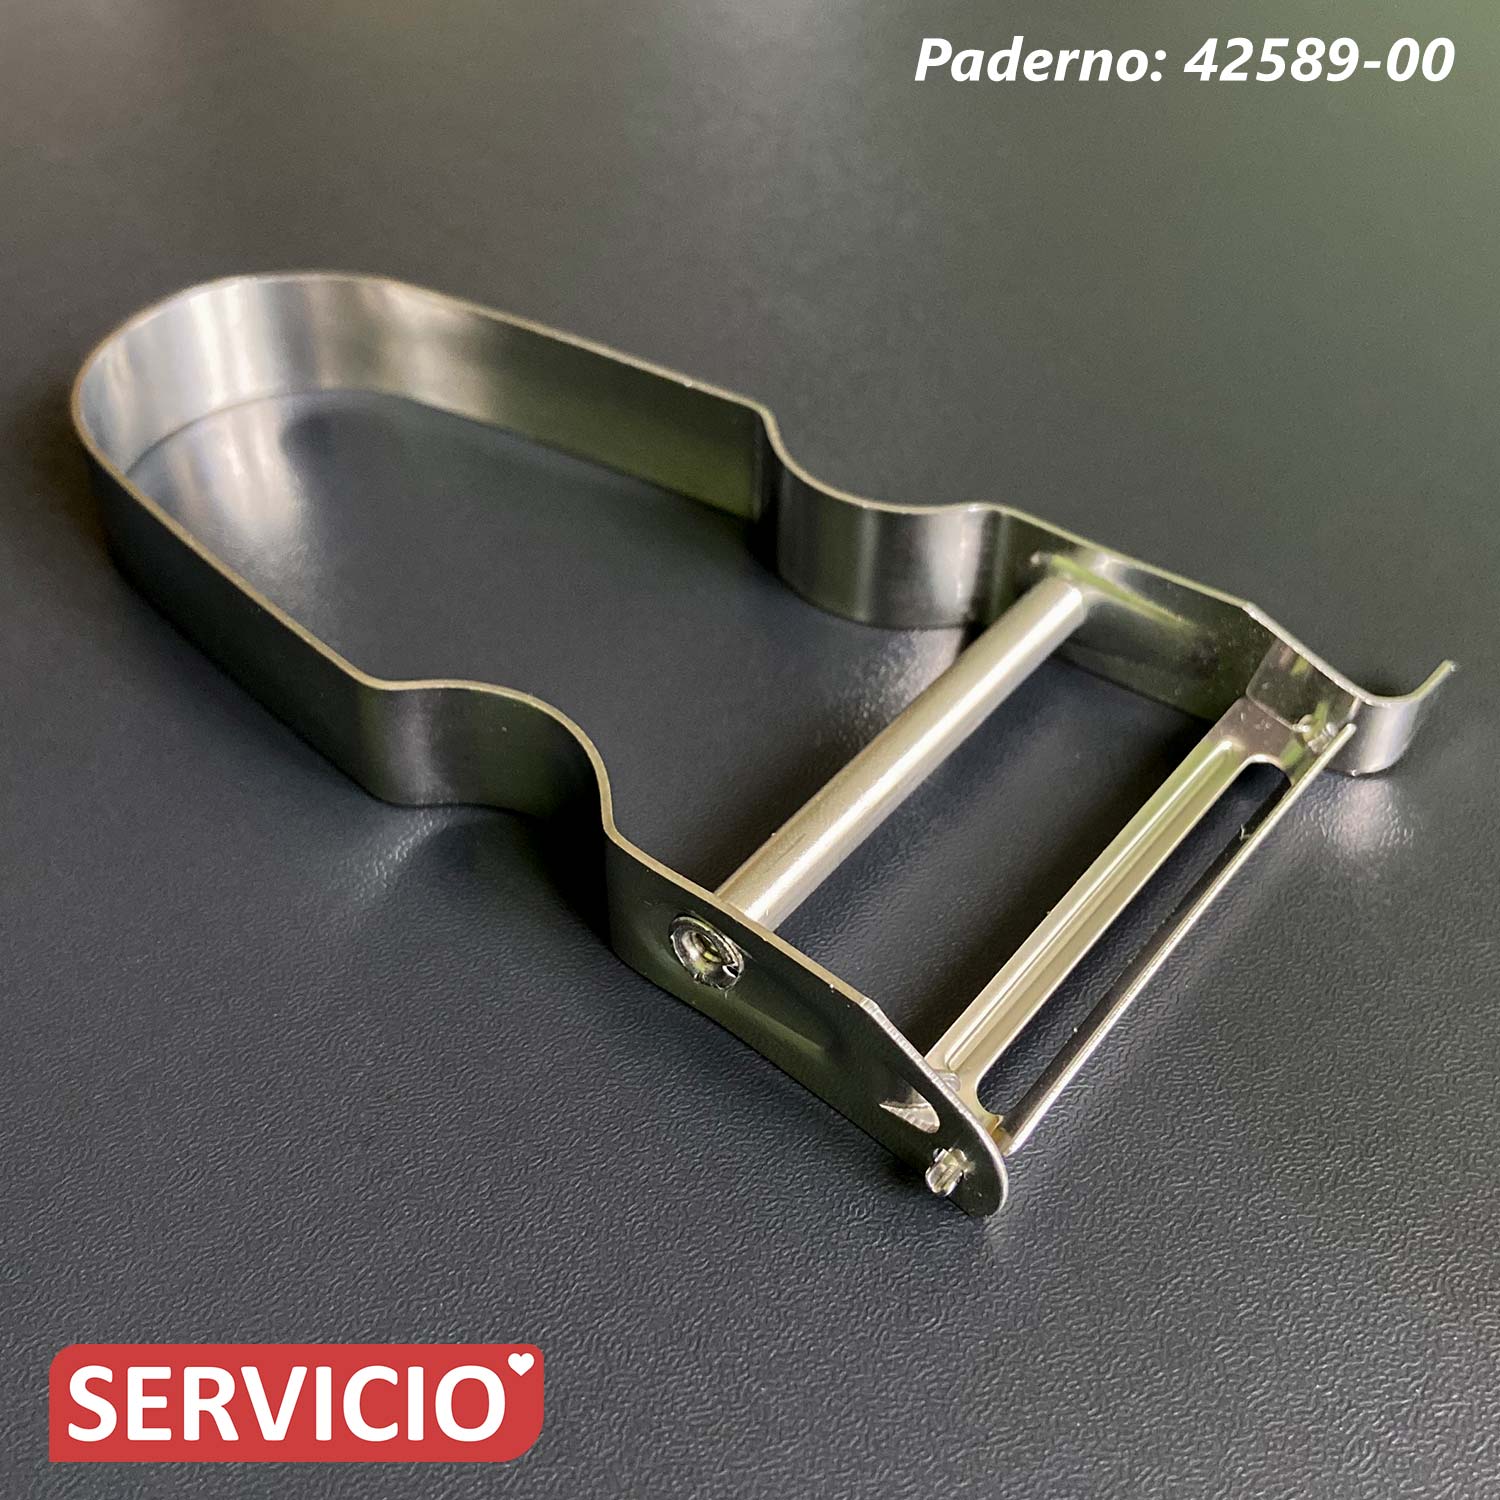 Нож для чистки картофеля Paderno 42589-00